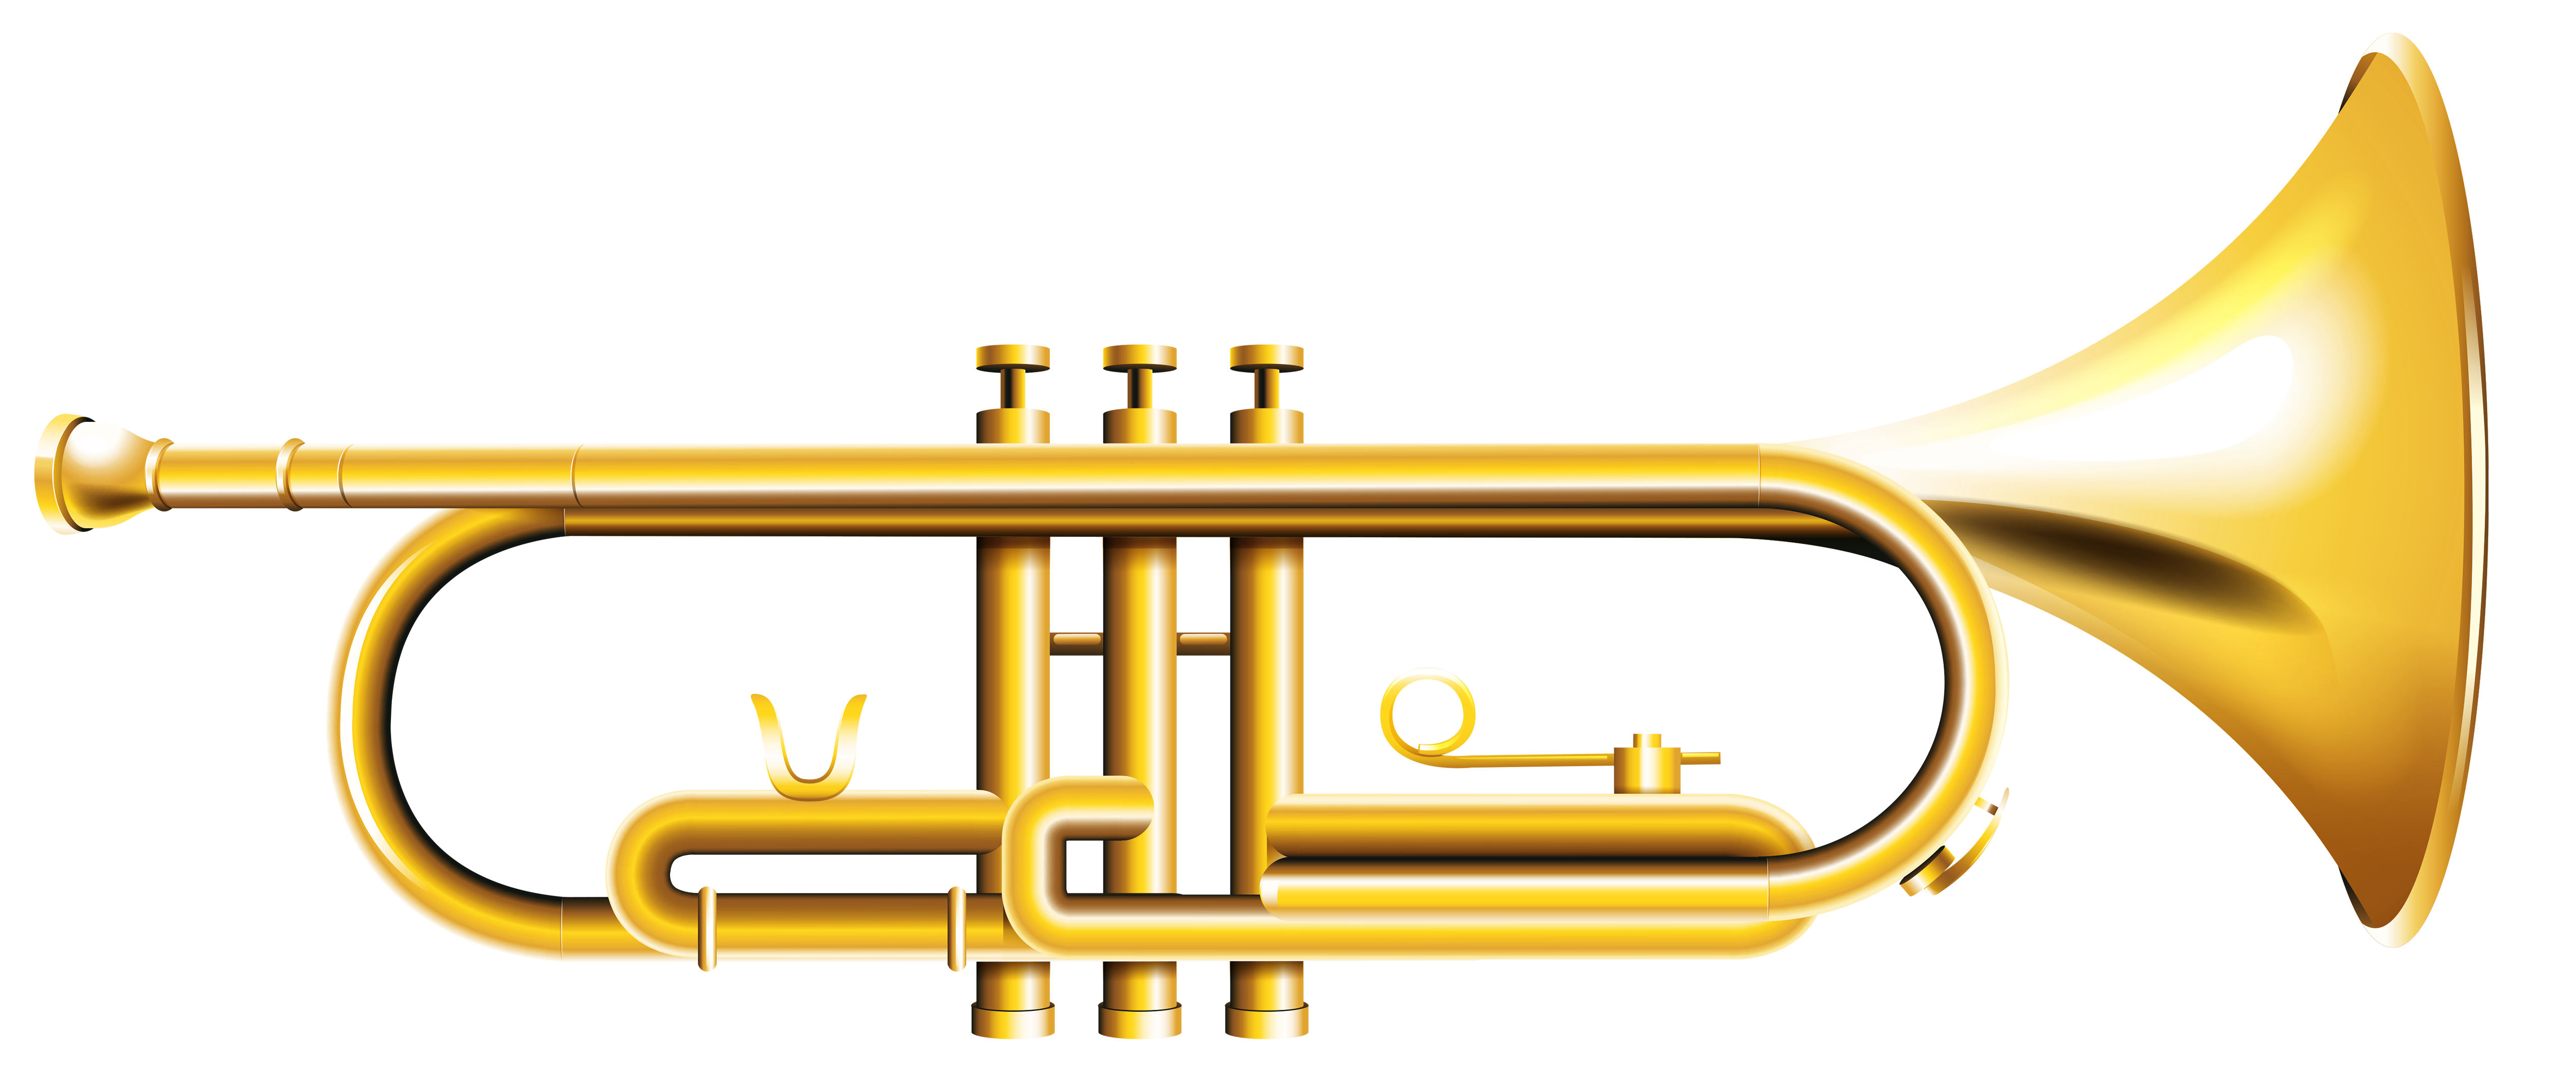 Name: Trumpet1.png Views: 471